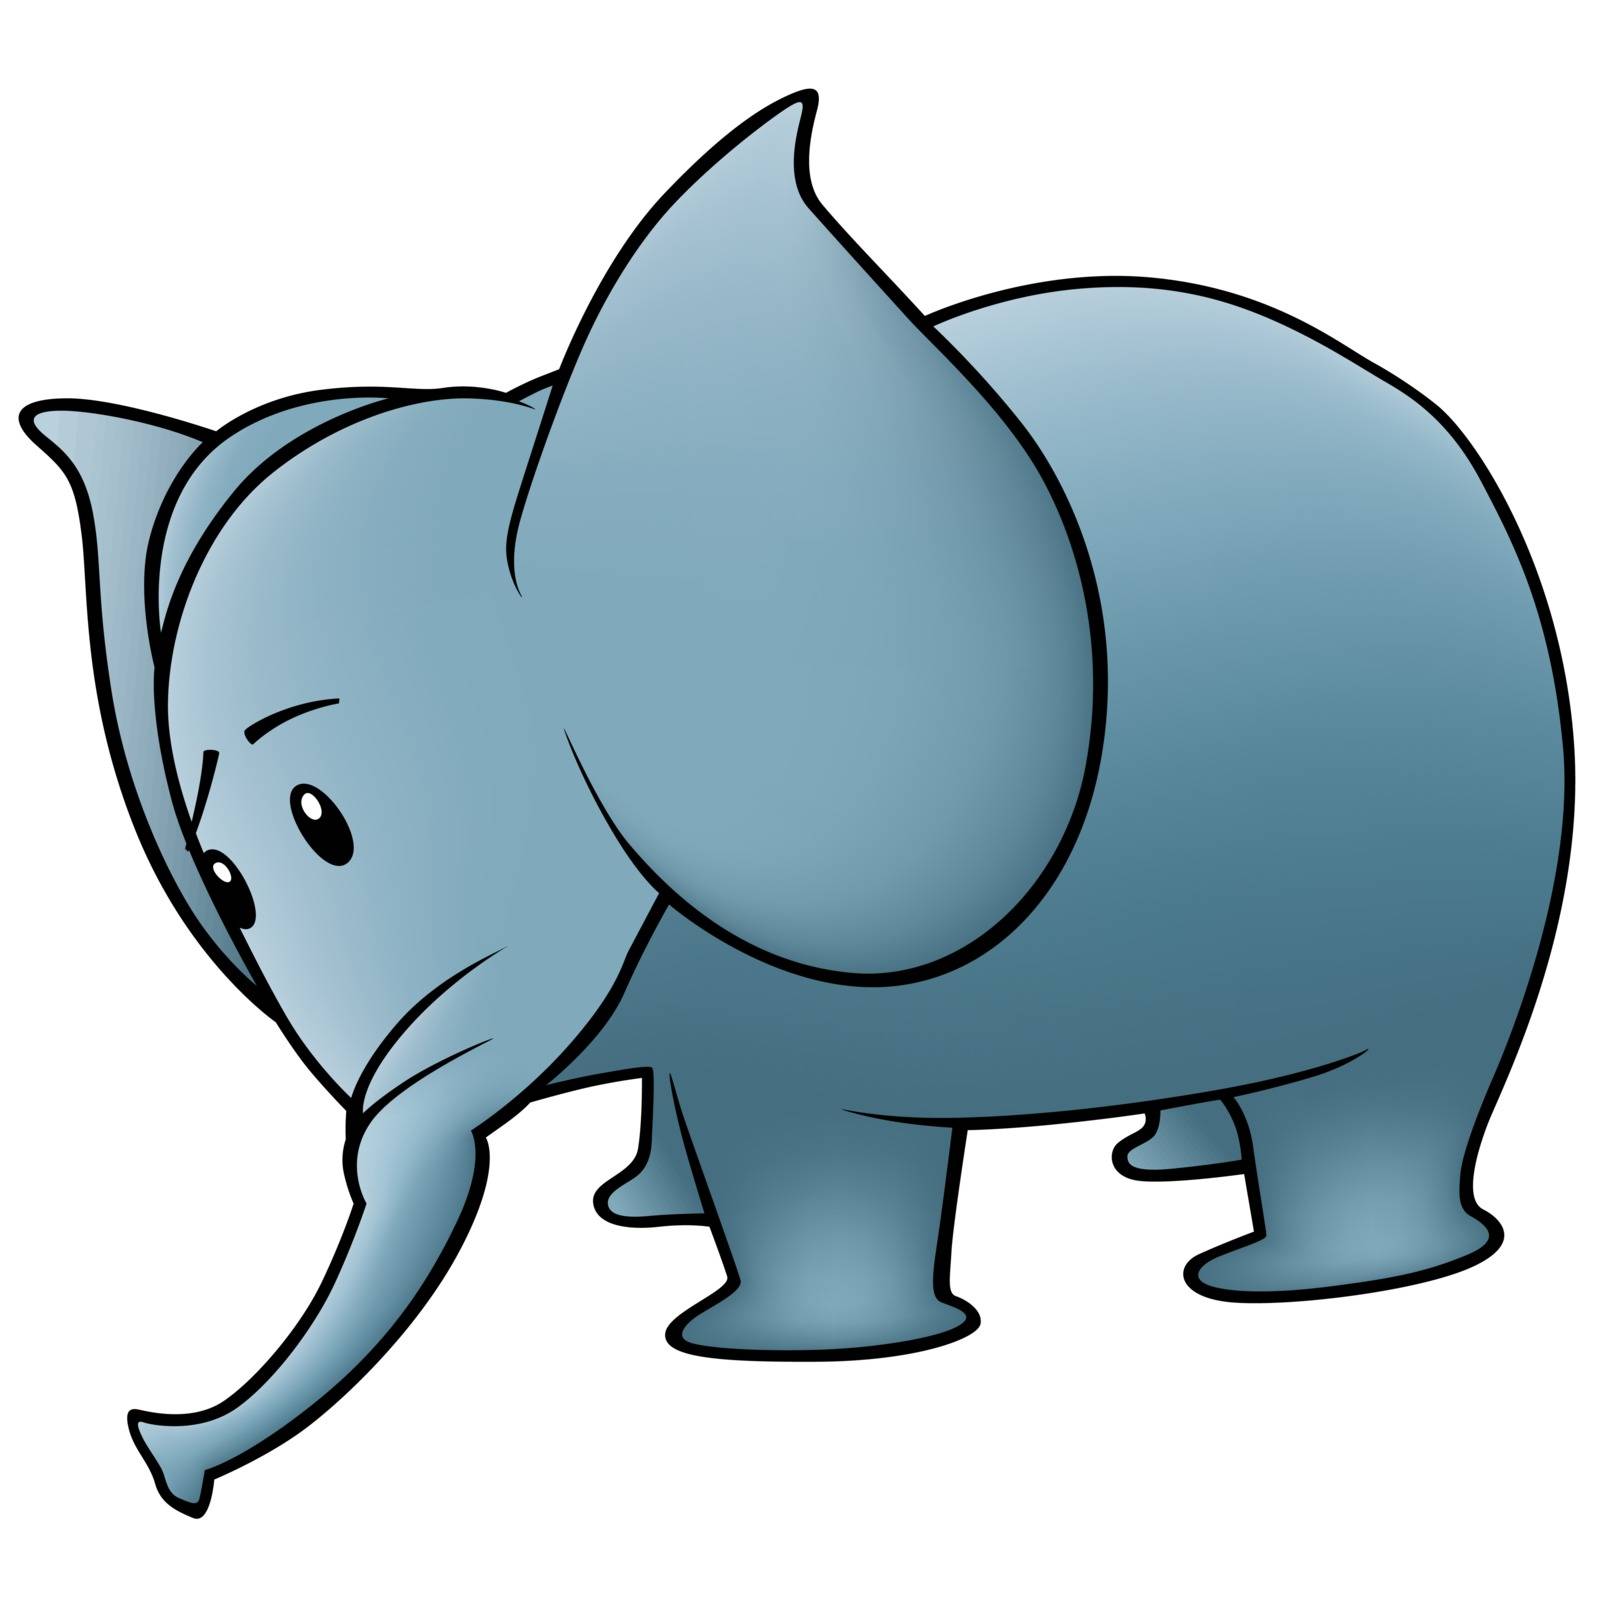 Small Blue Elephant - Colored Cartoon Illustration, Vector